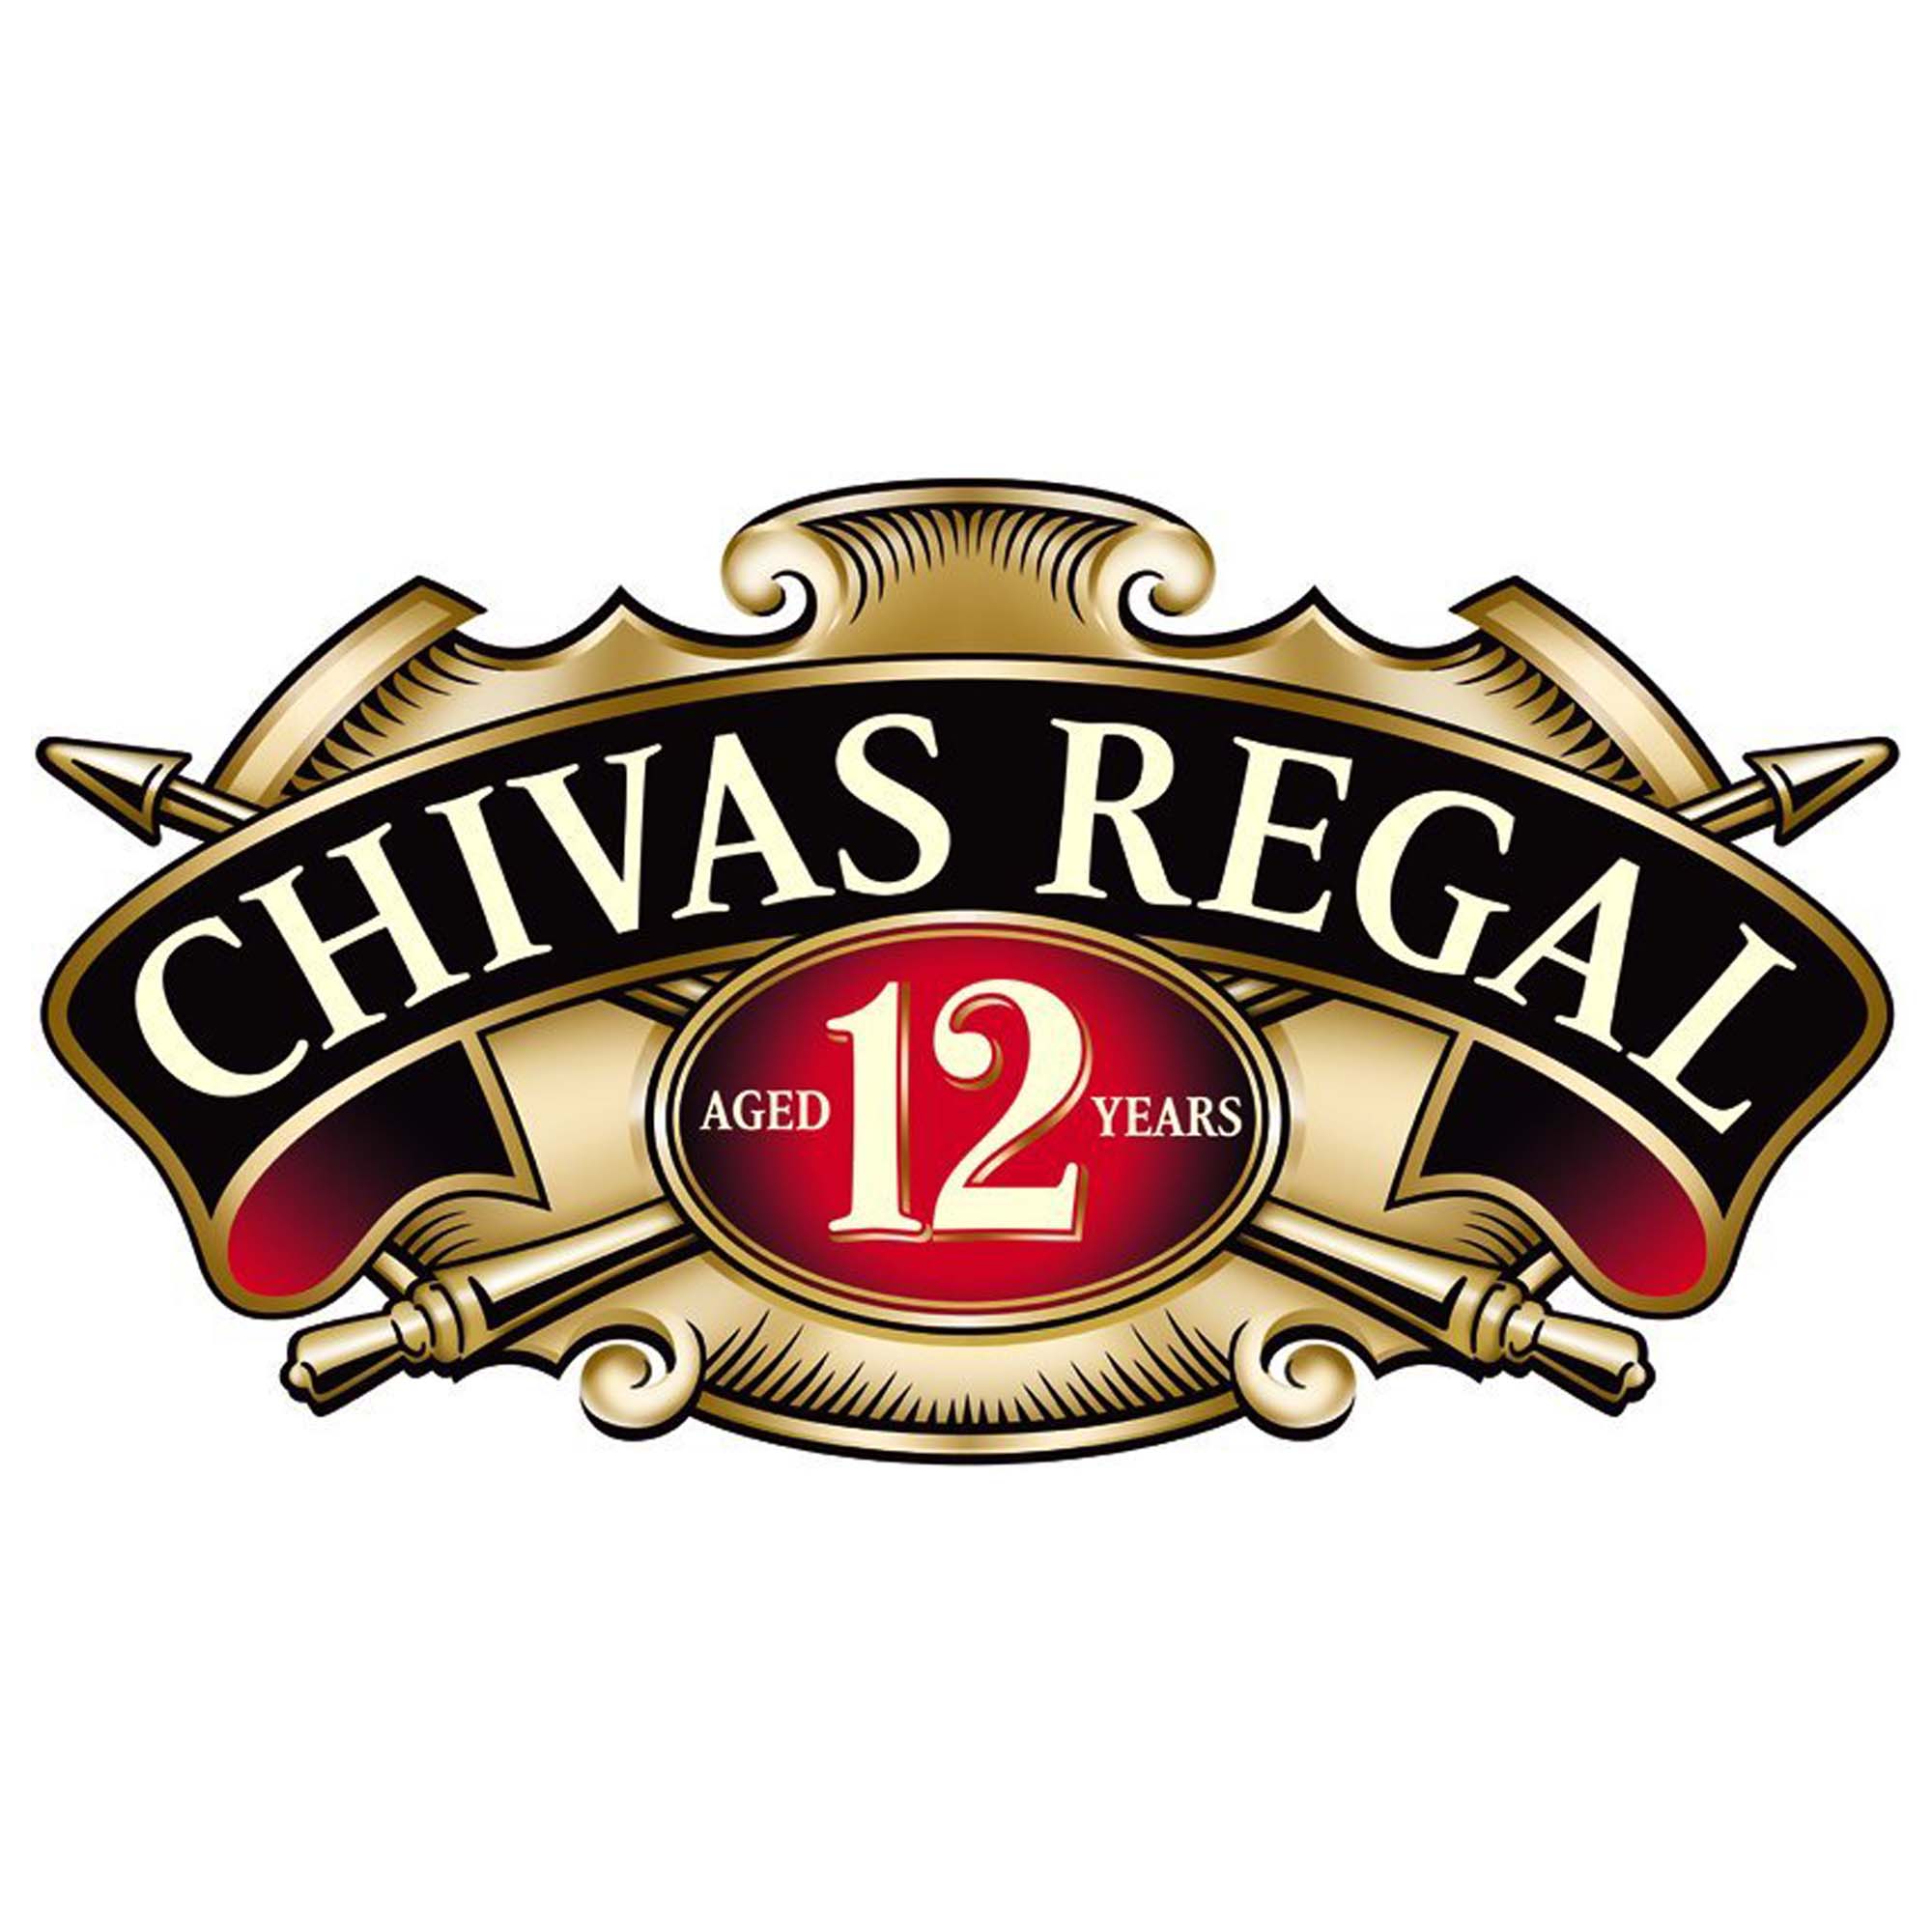 Aged 12 Years Logo - Chivas Regal Aged 12 Years Logo